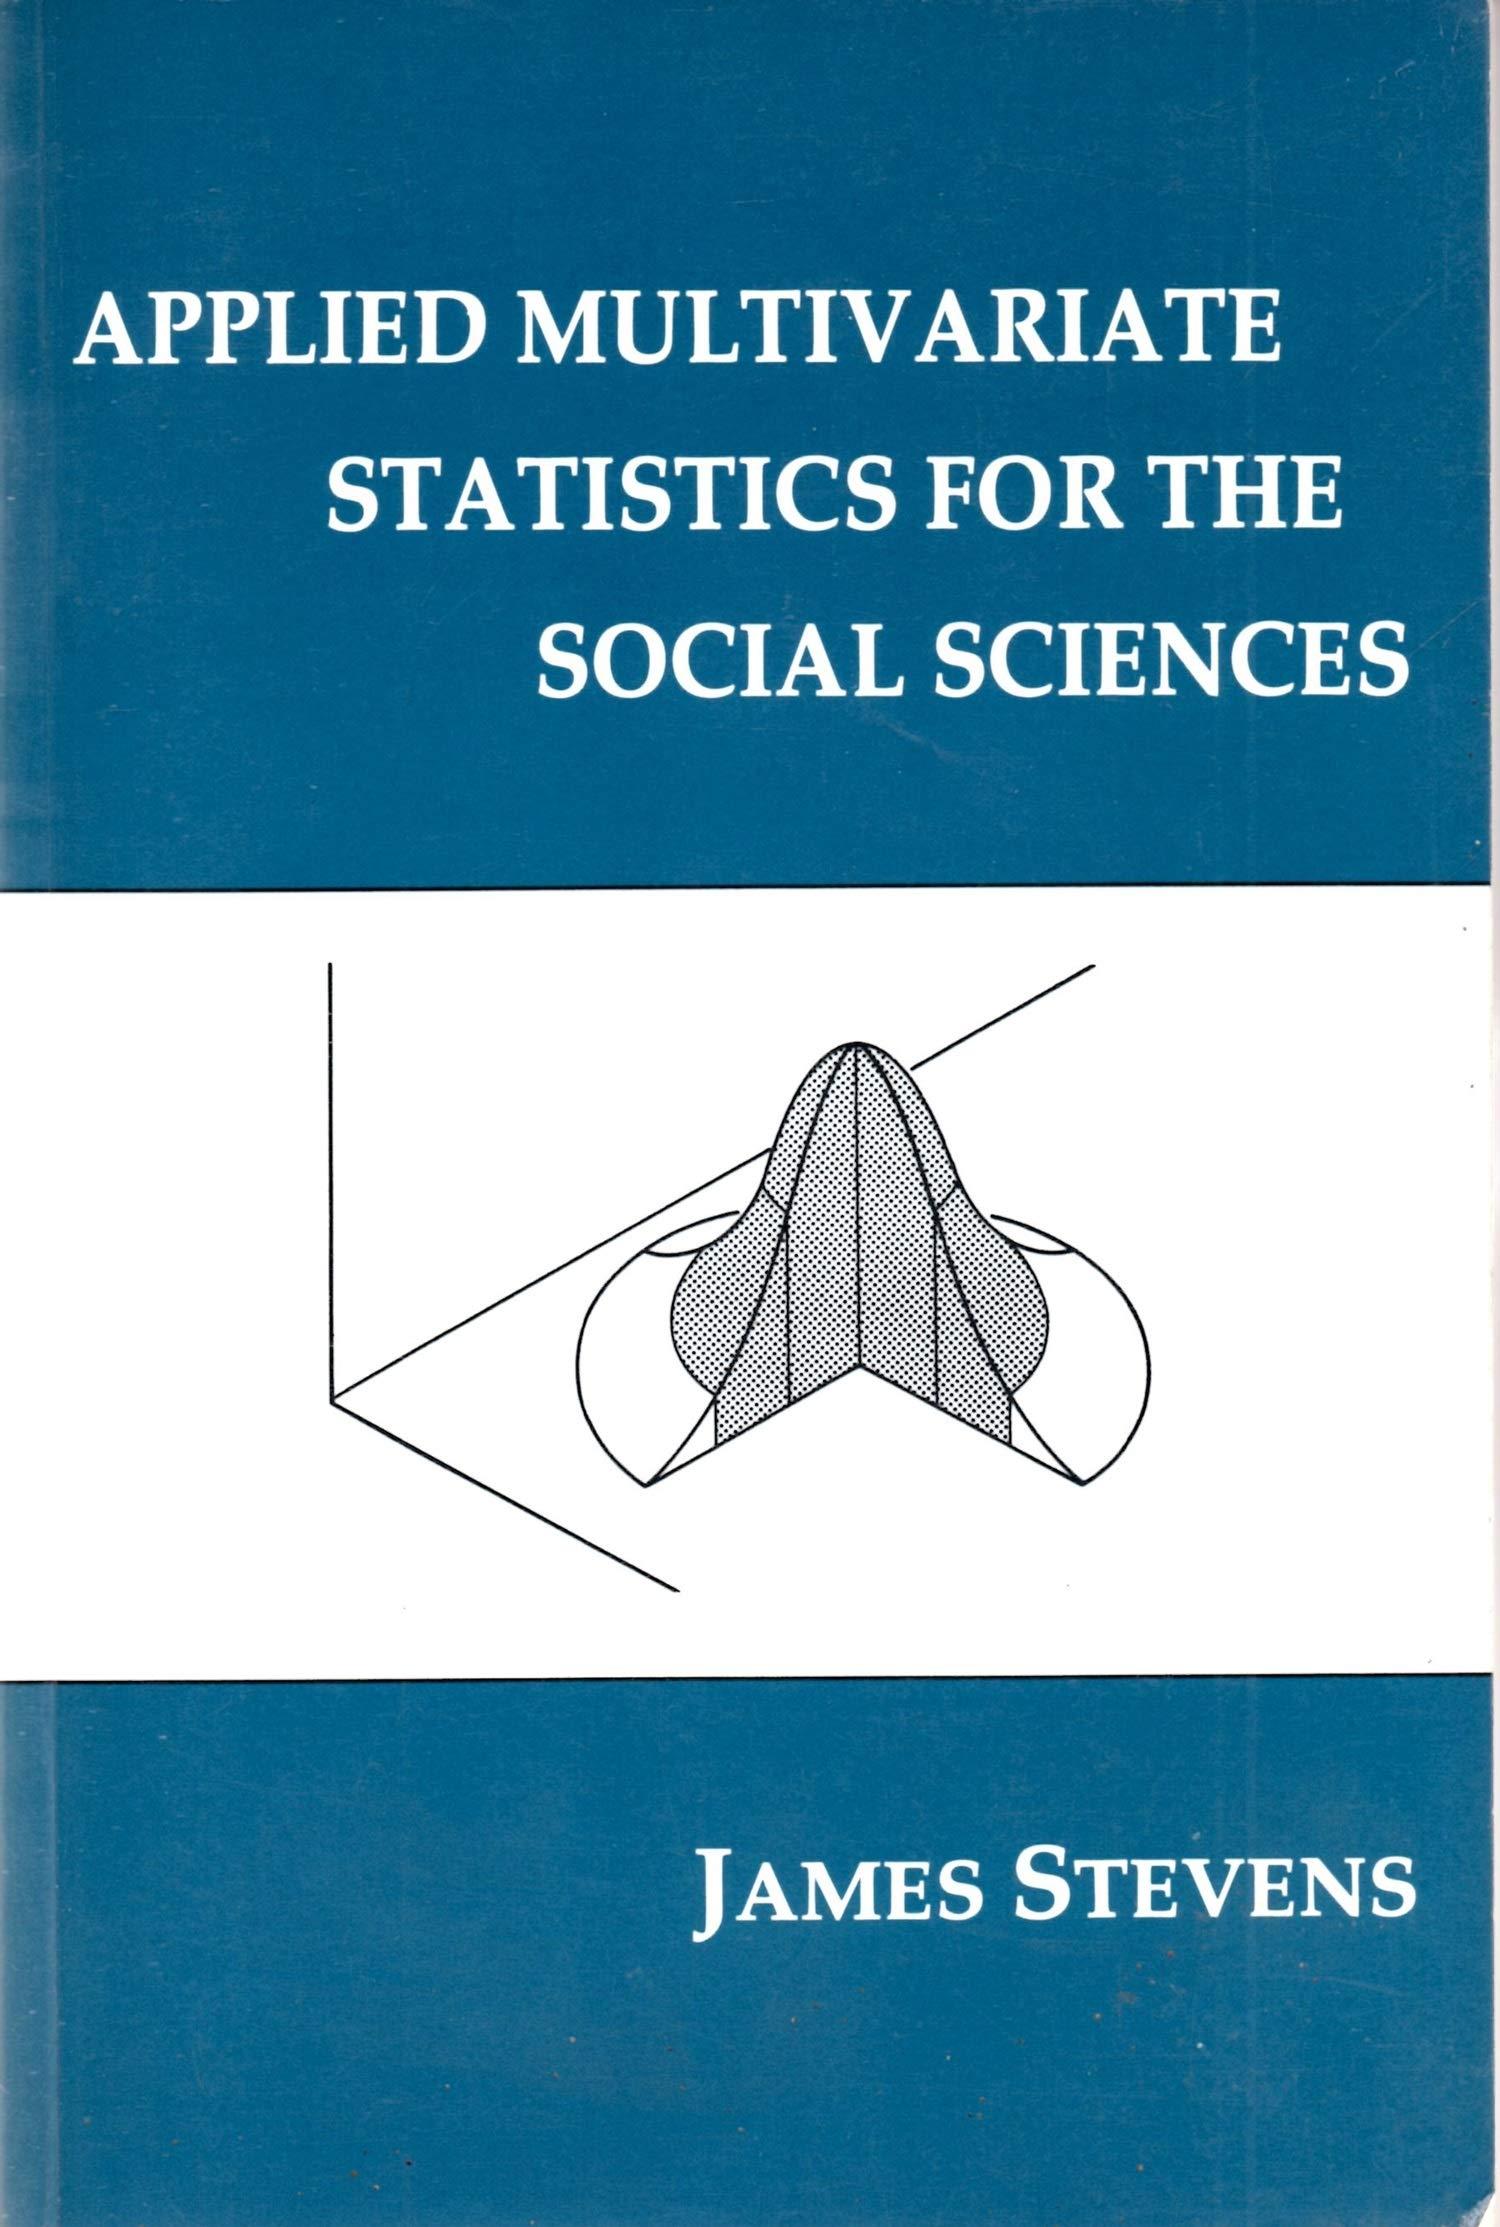 applied multivariate statistics for the social sciences 1st edition james stevens 0805802541, 978-0805802542